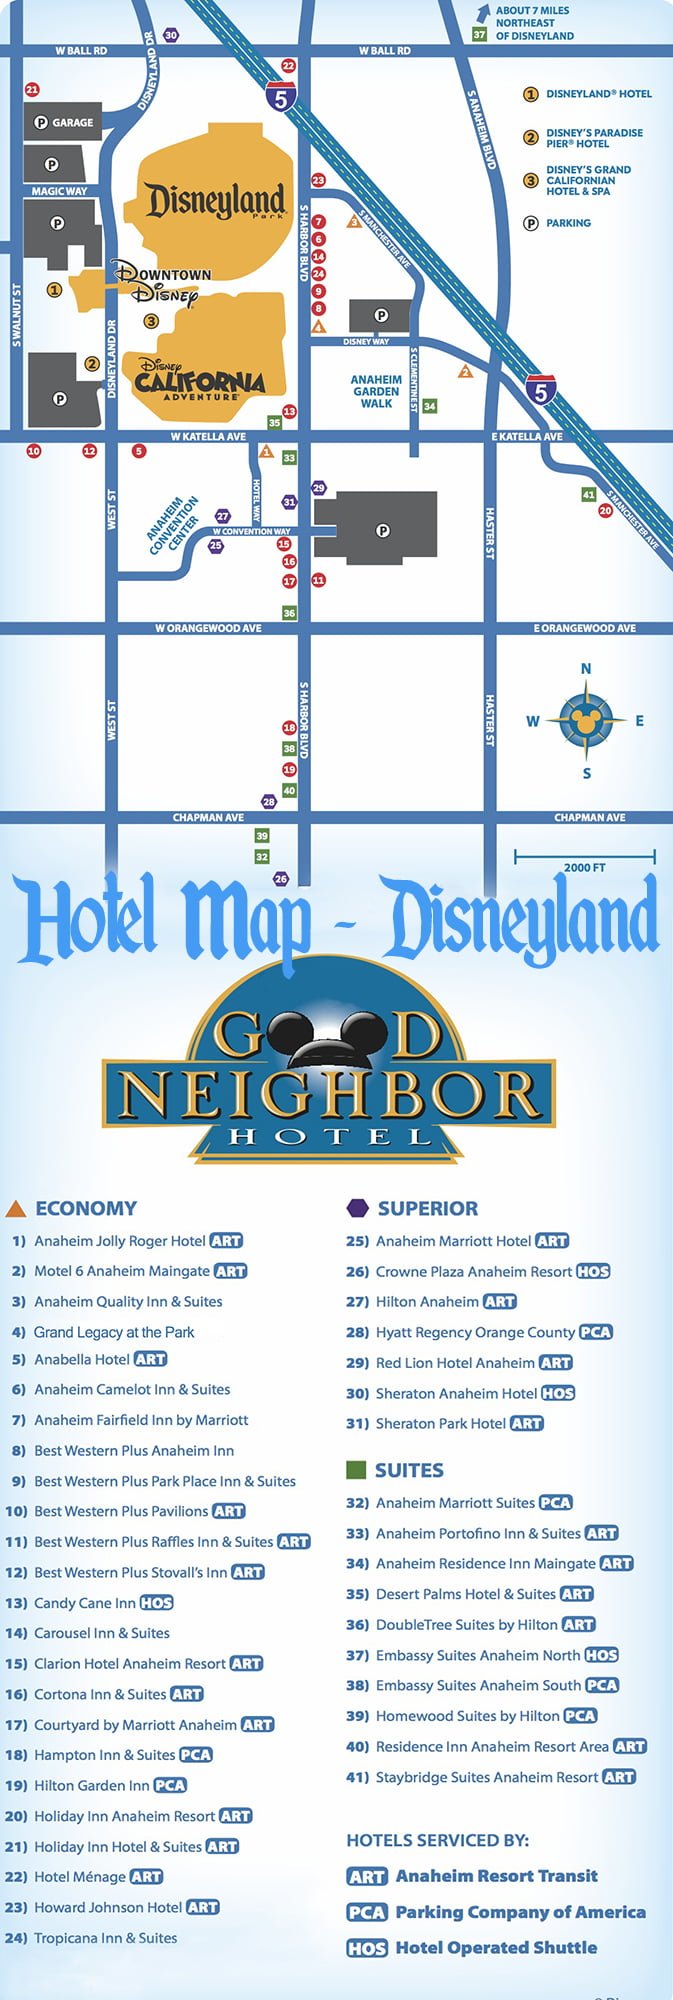 Disneyland Area Hotel Reviews & Rankings - Disney Tourist Blog